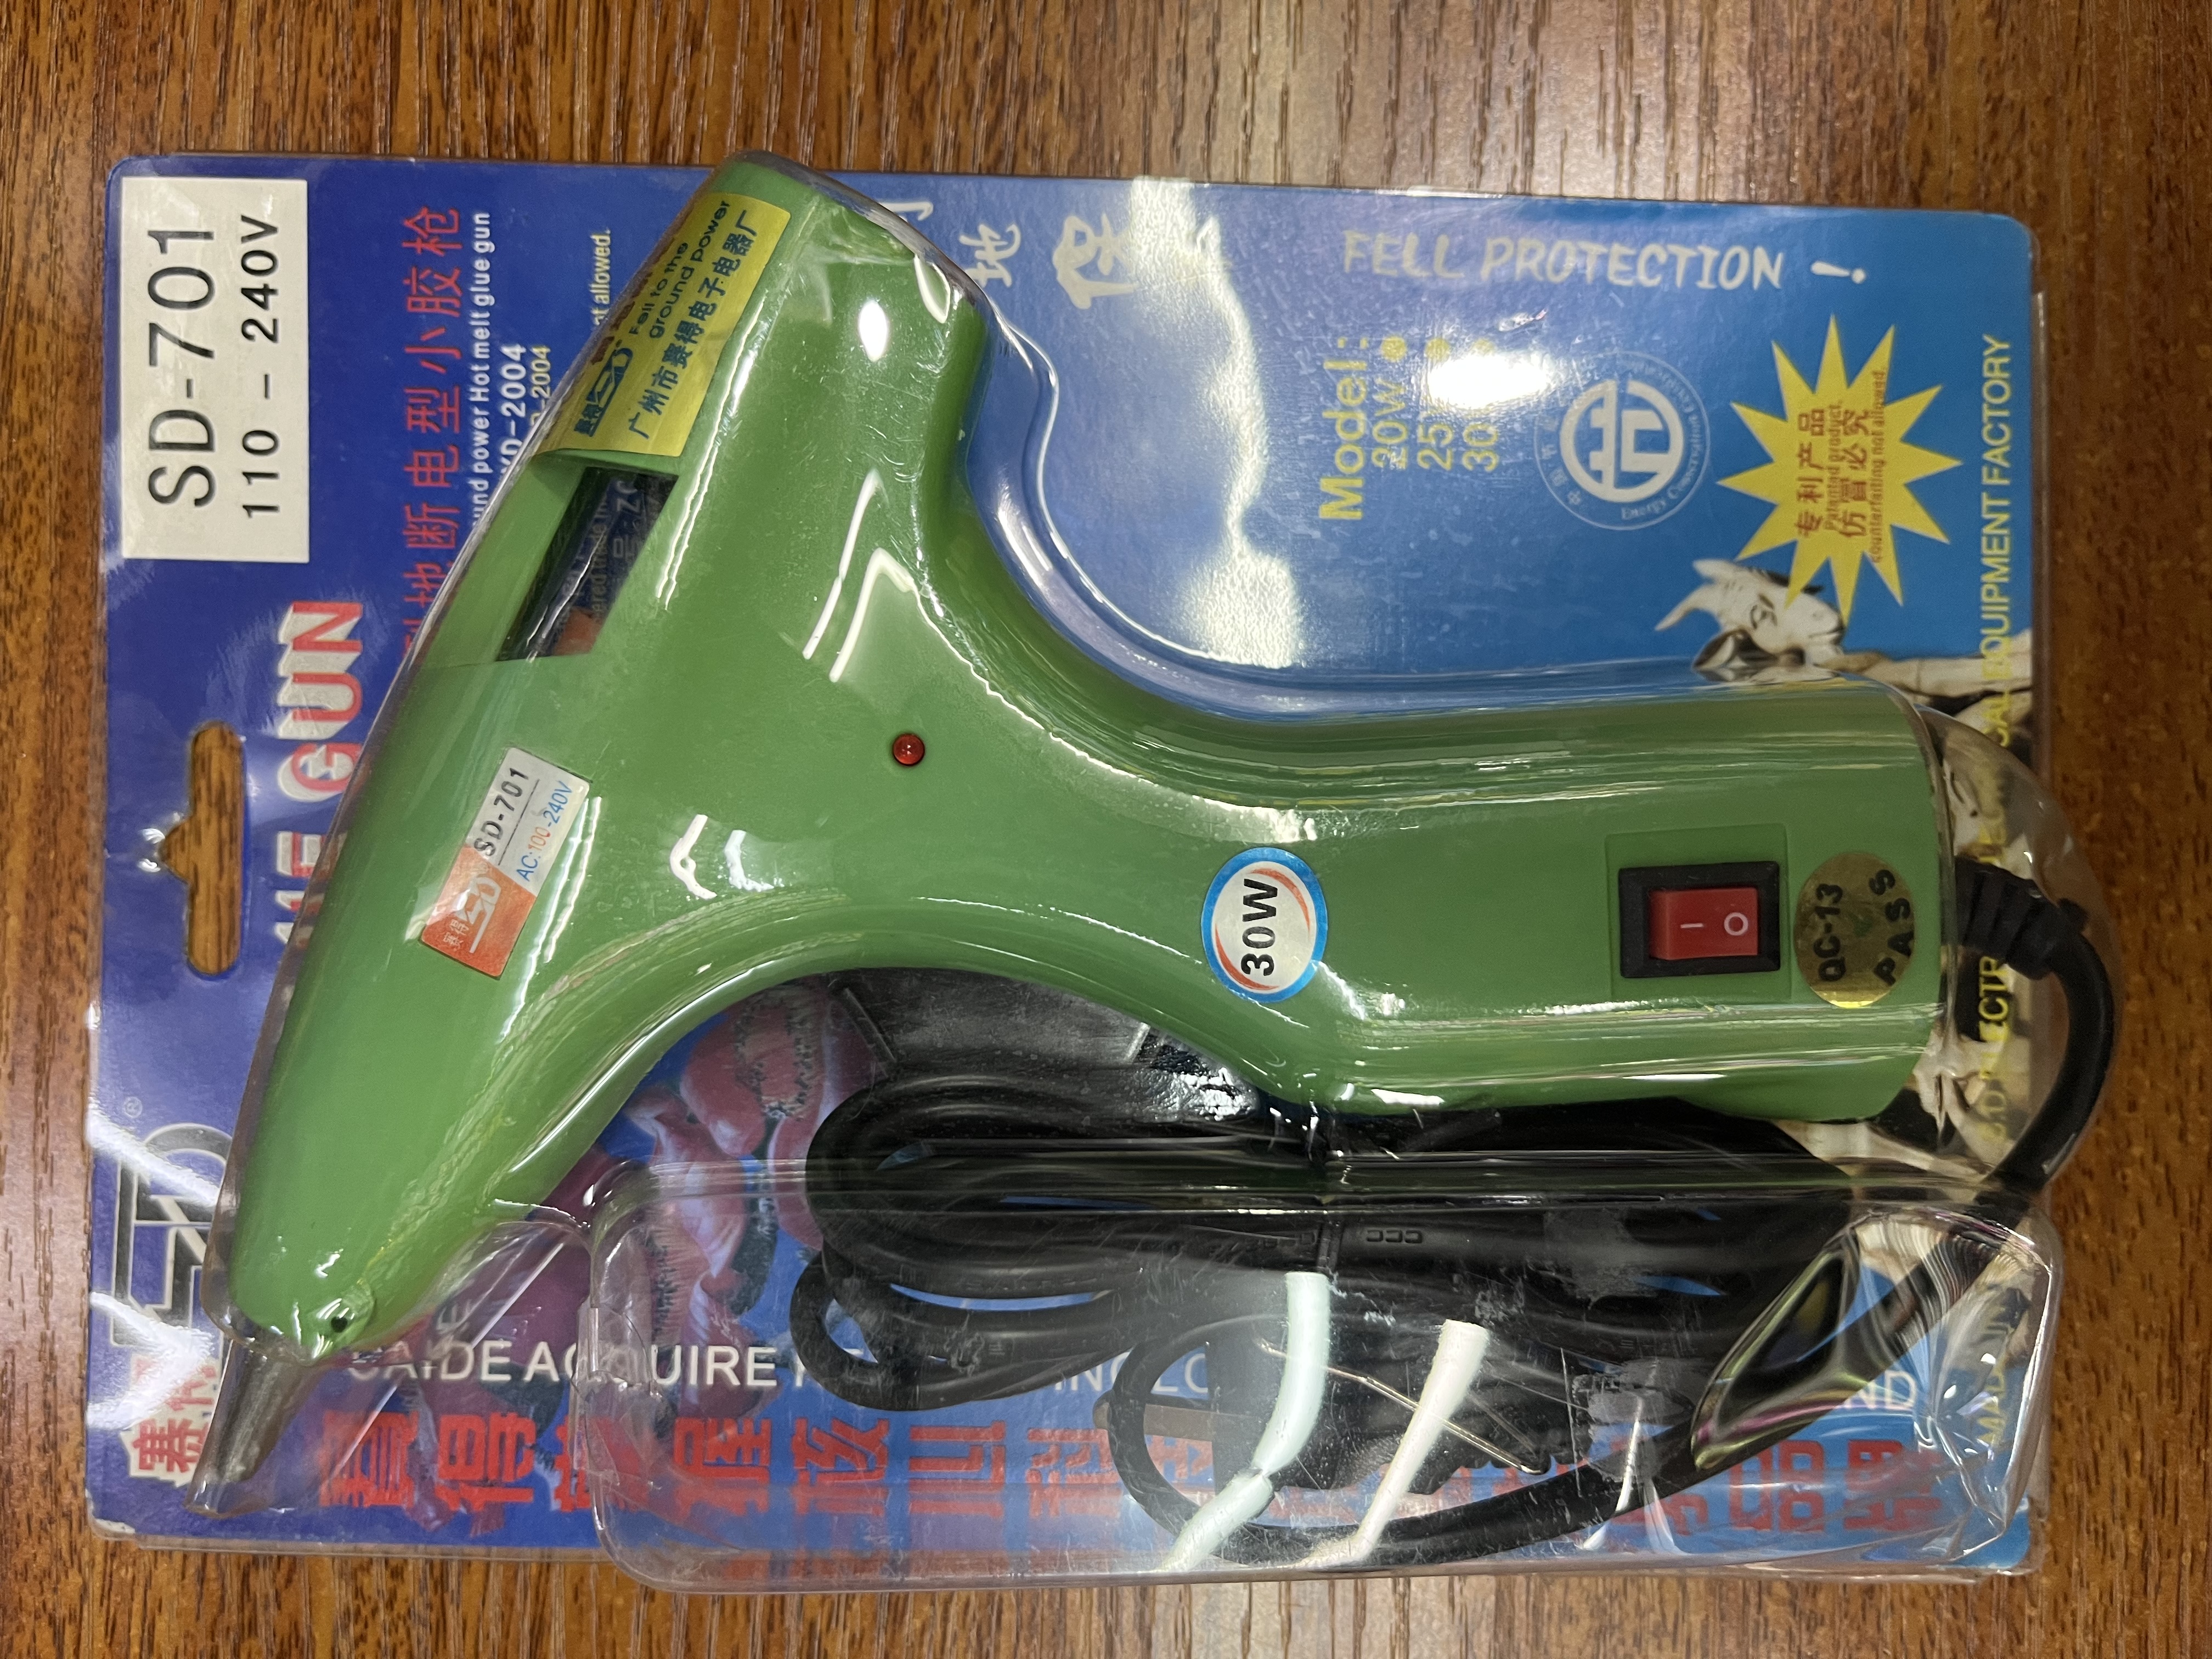 SD-701 30w高温小胶枪 绿色 